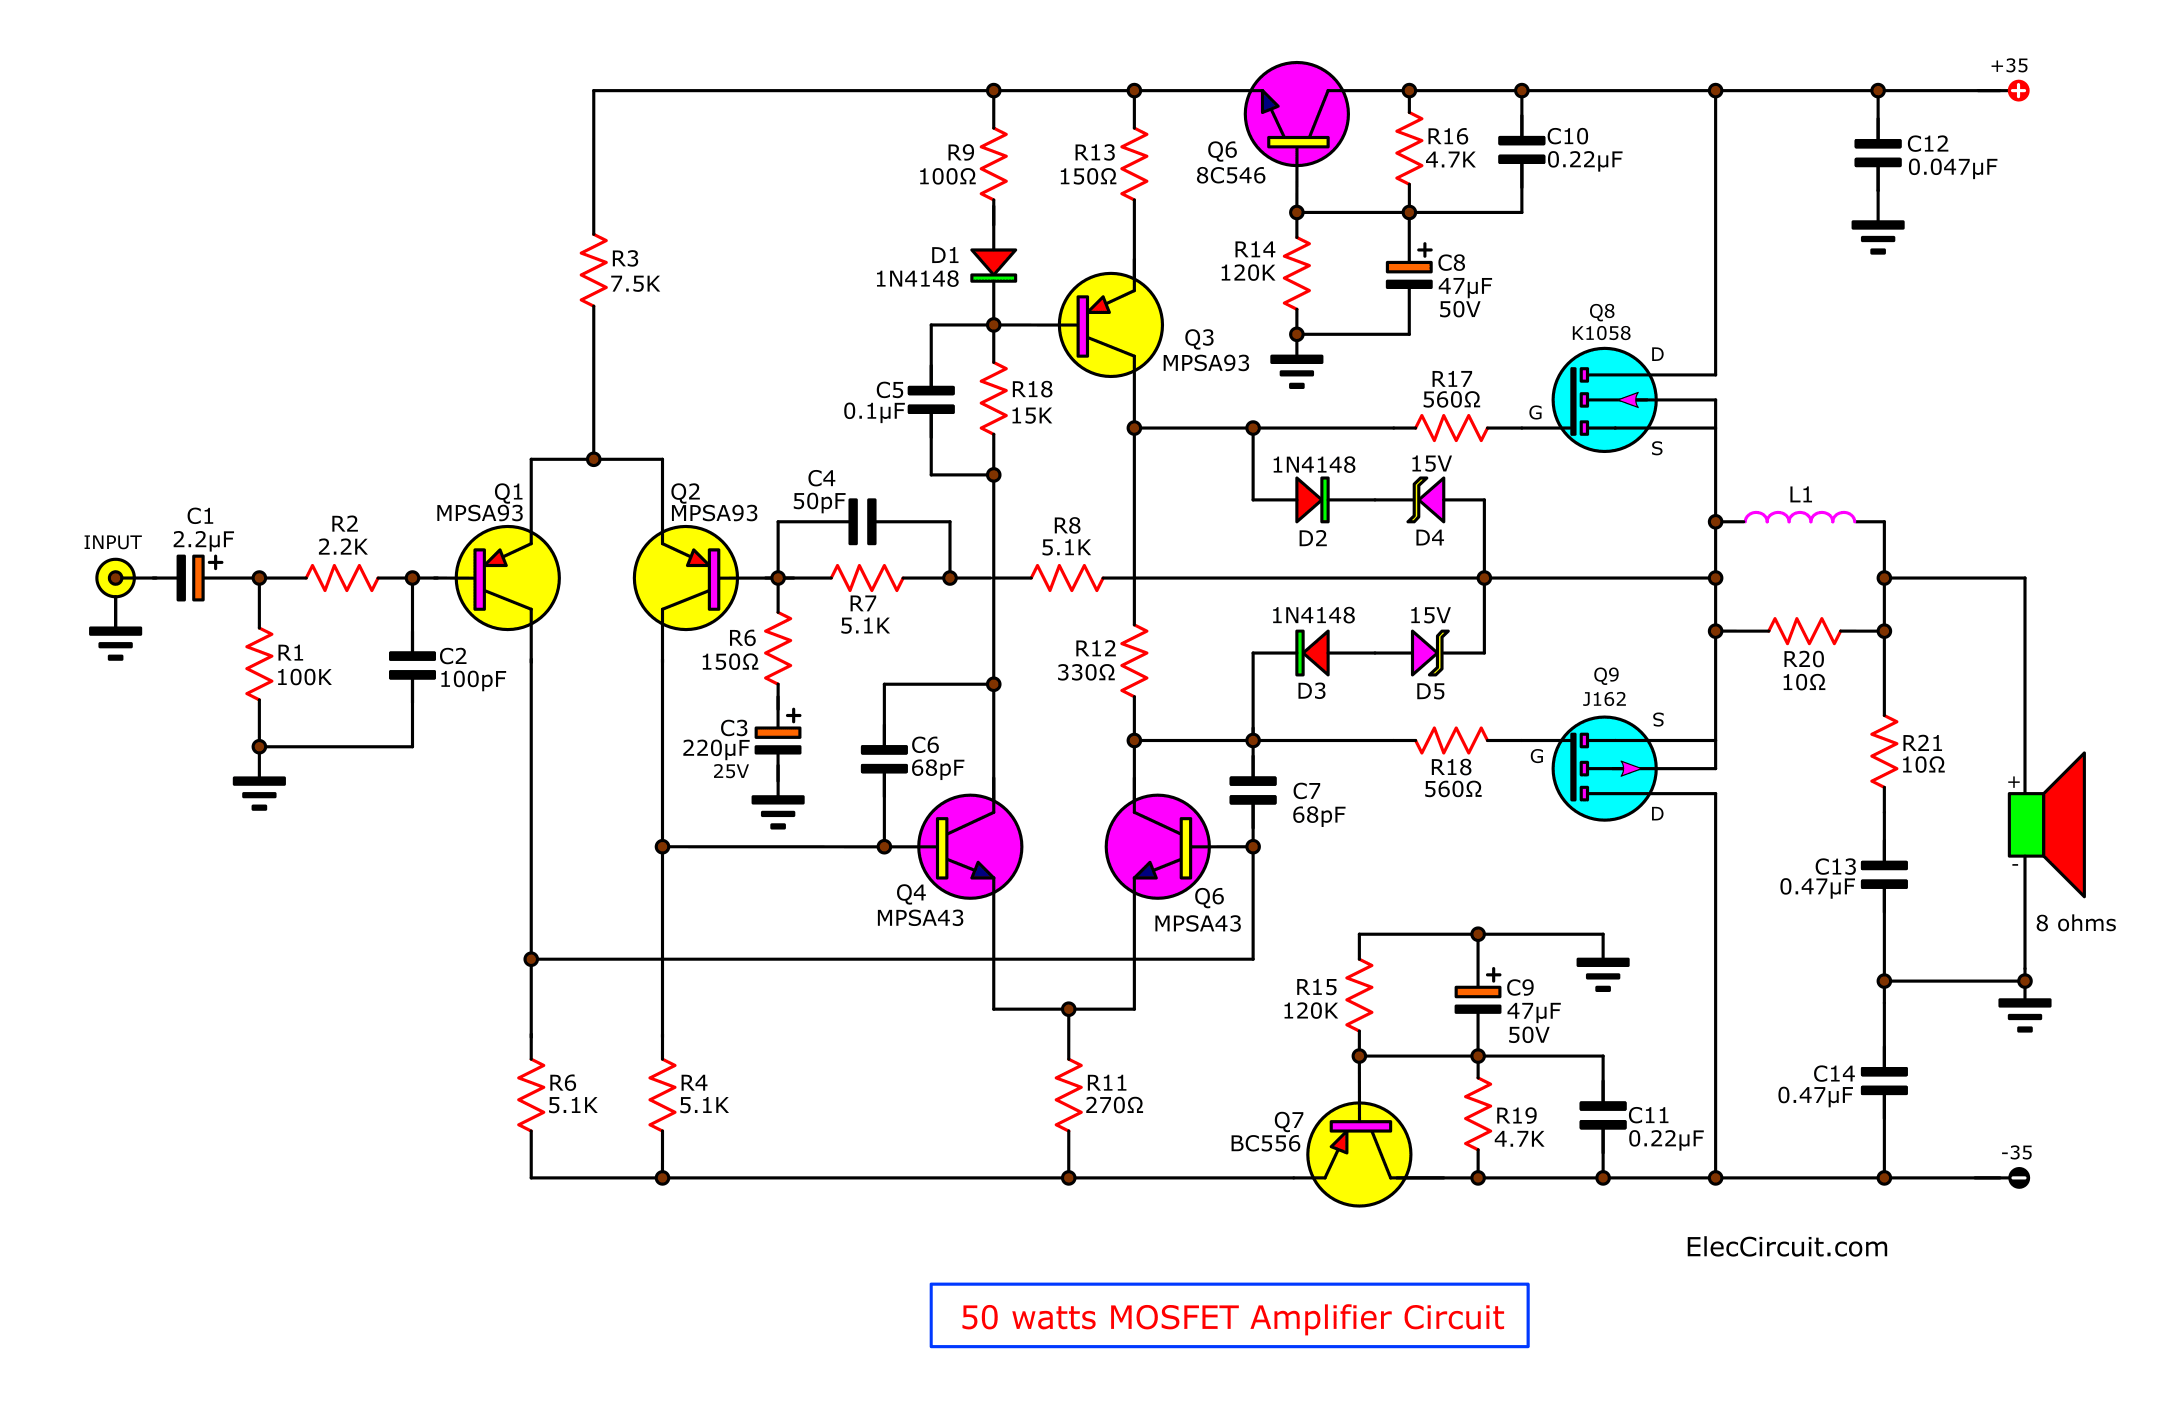 50w mosfet amplifier circuit OCL using K1058 + J162